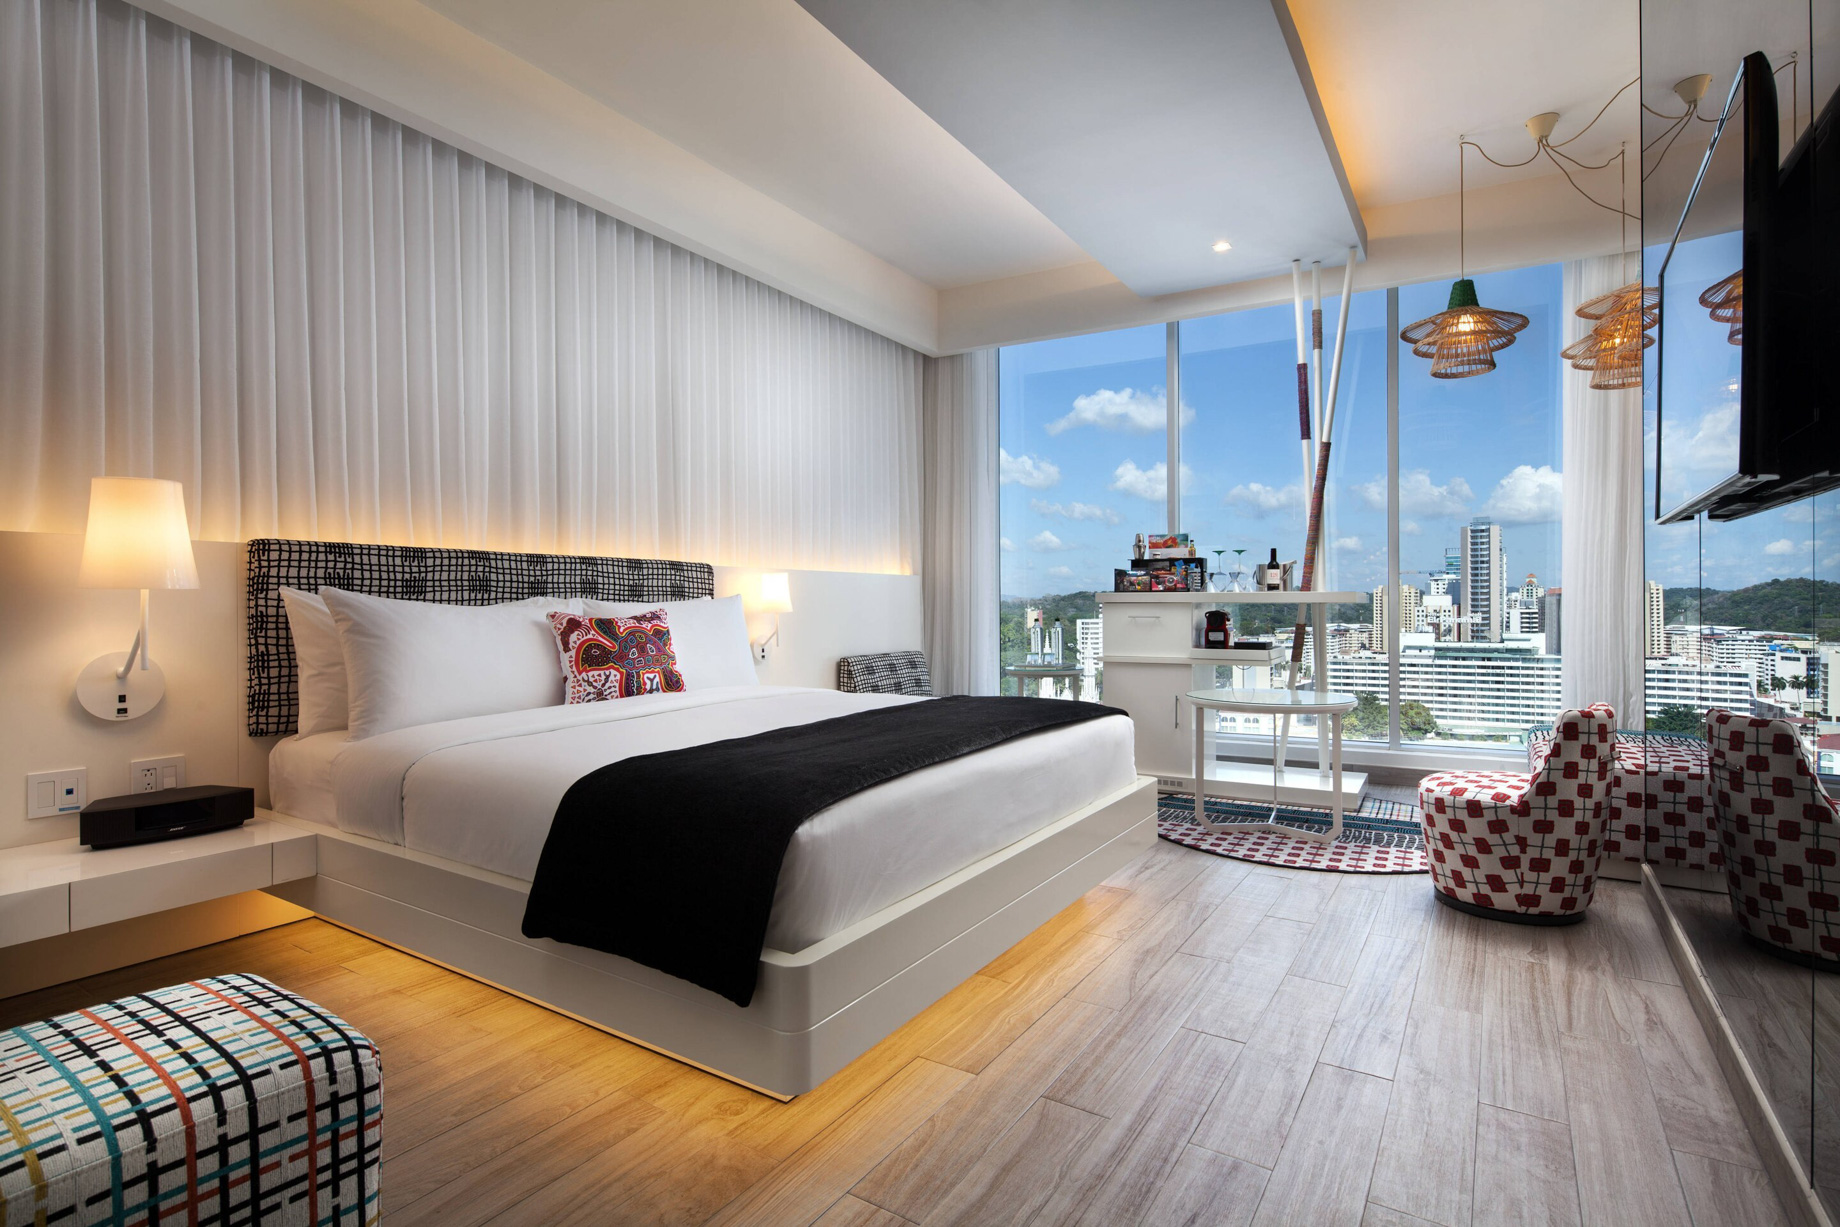 W Panama Hotel – Panama City, Panama – Spectacular King Guest Room